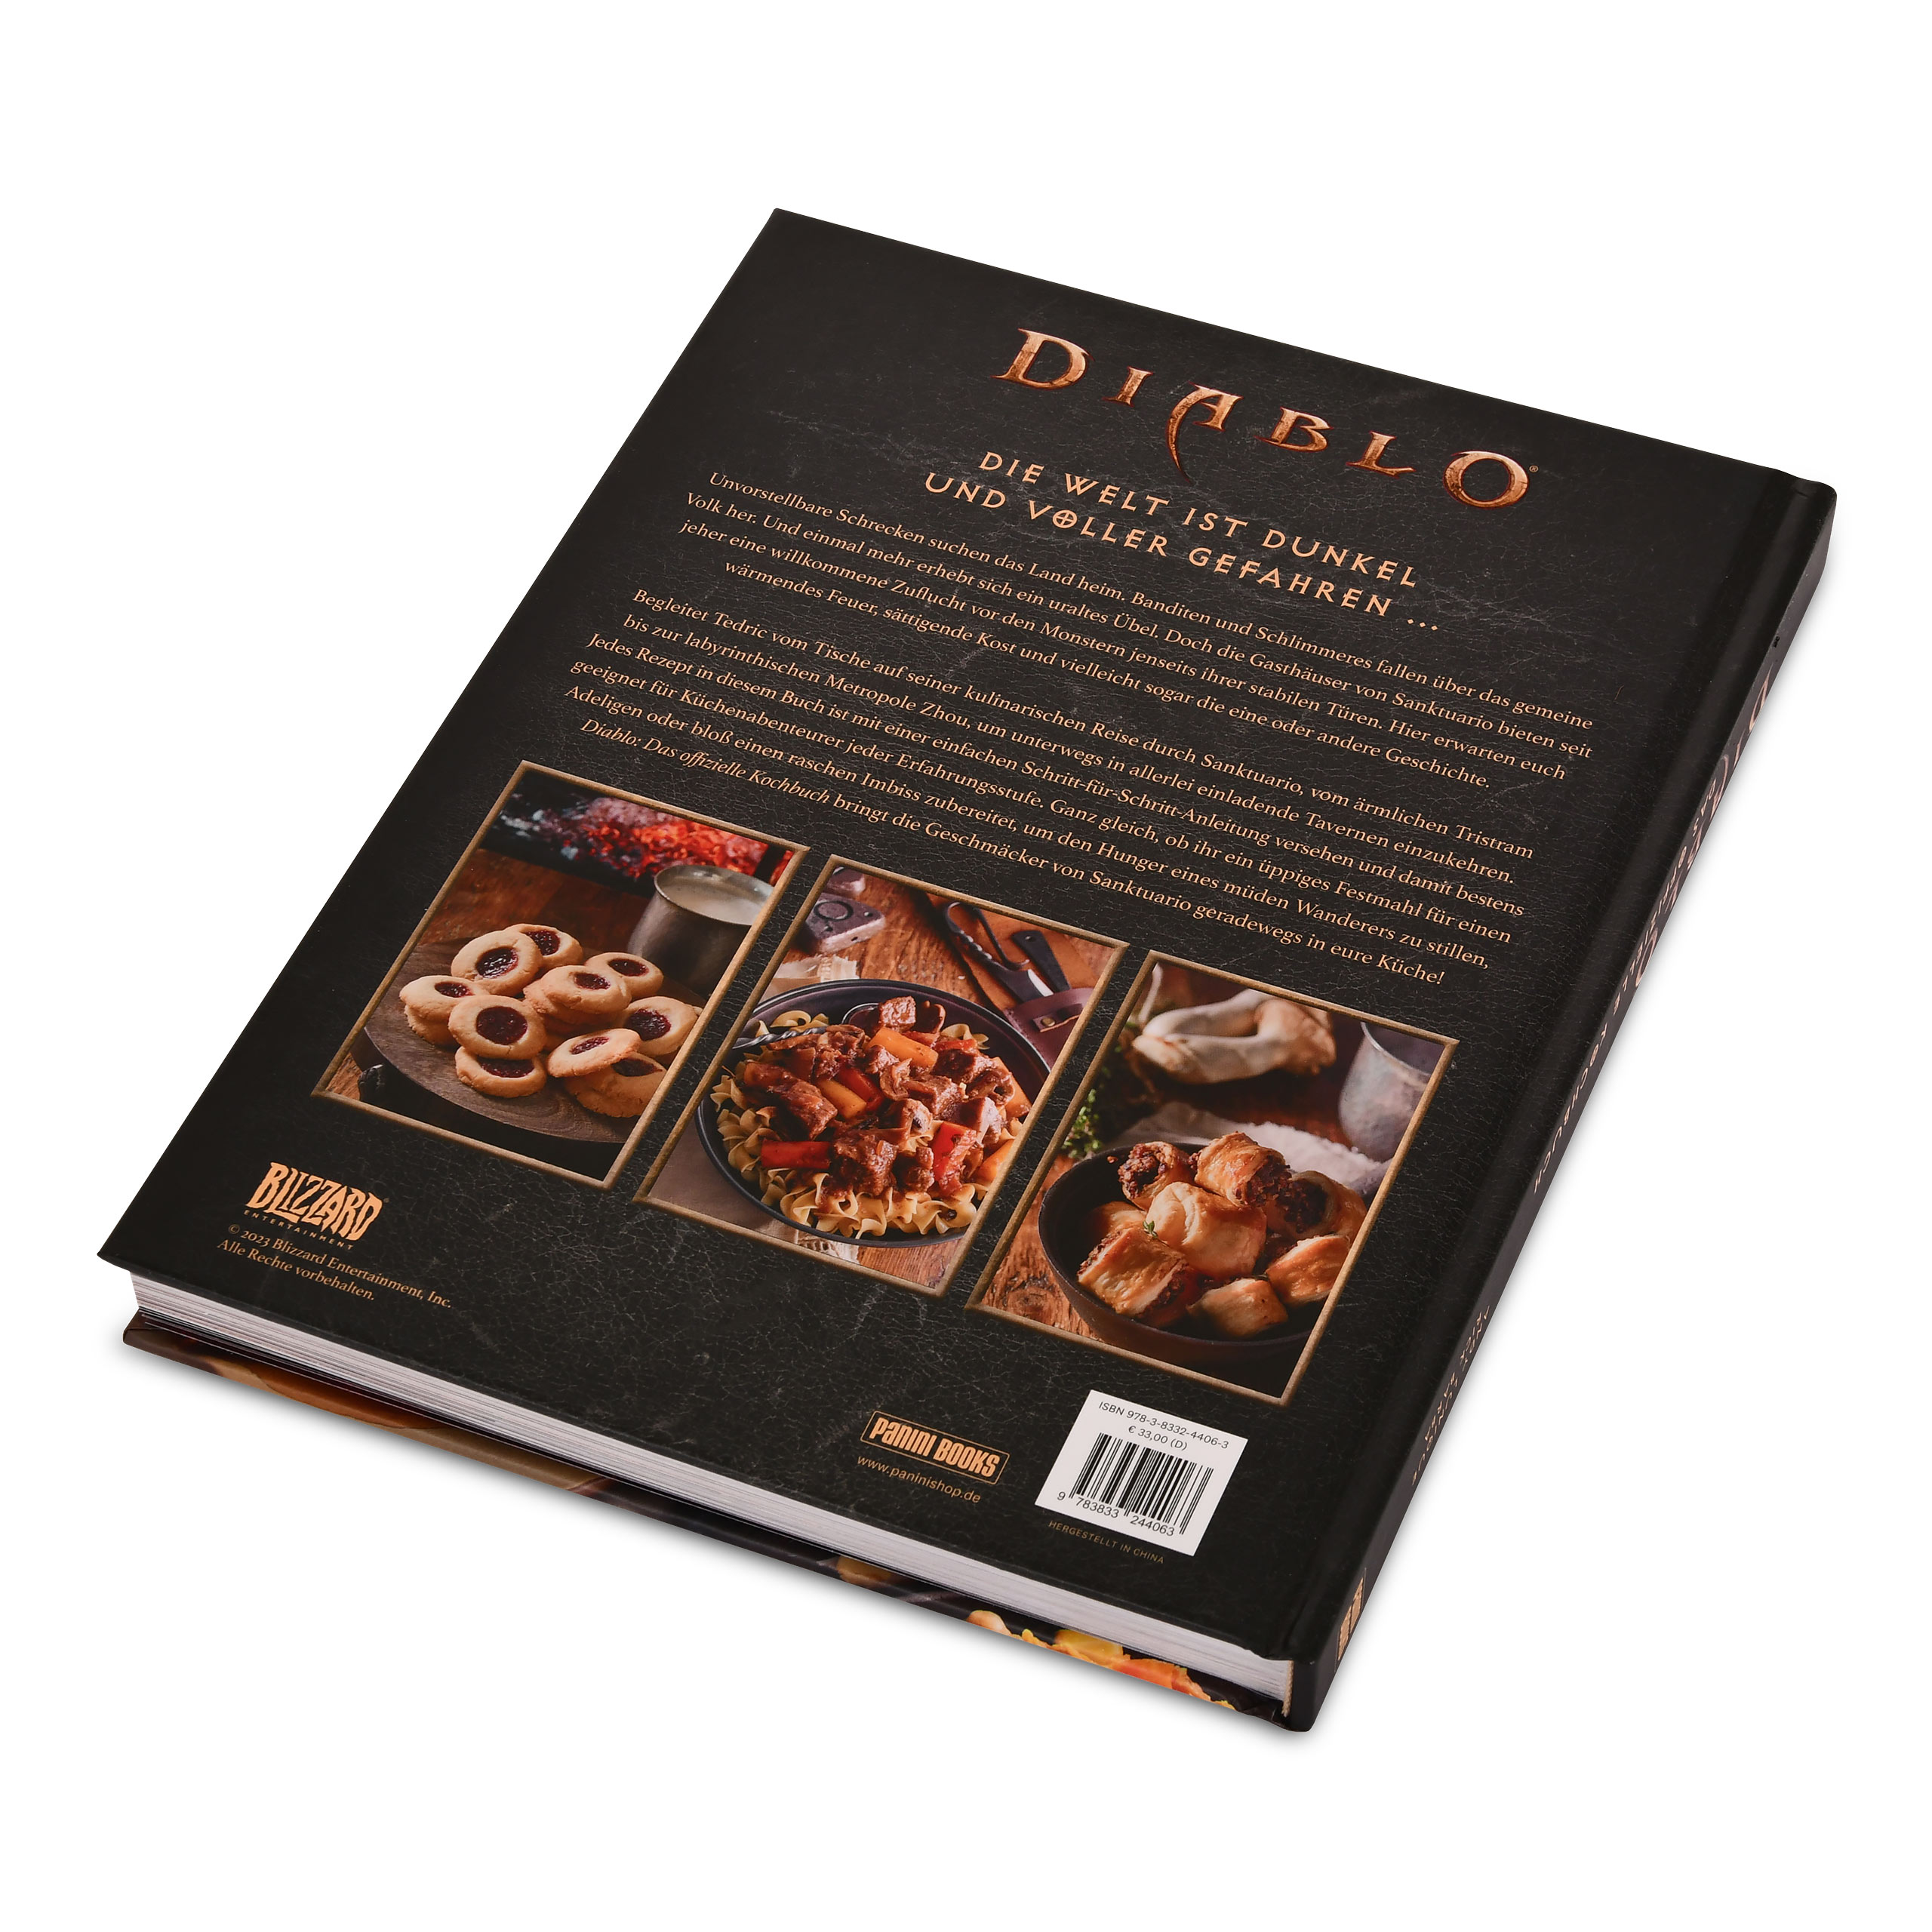 Diablo - The Official Cookbook